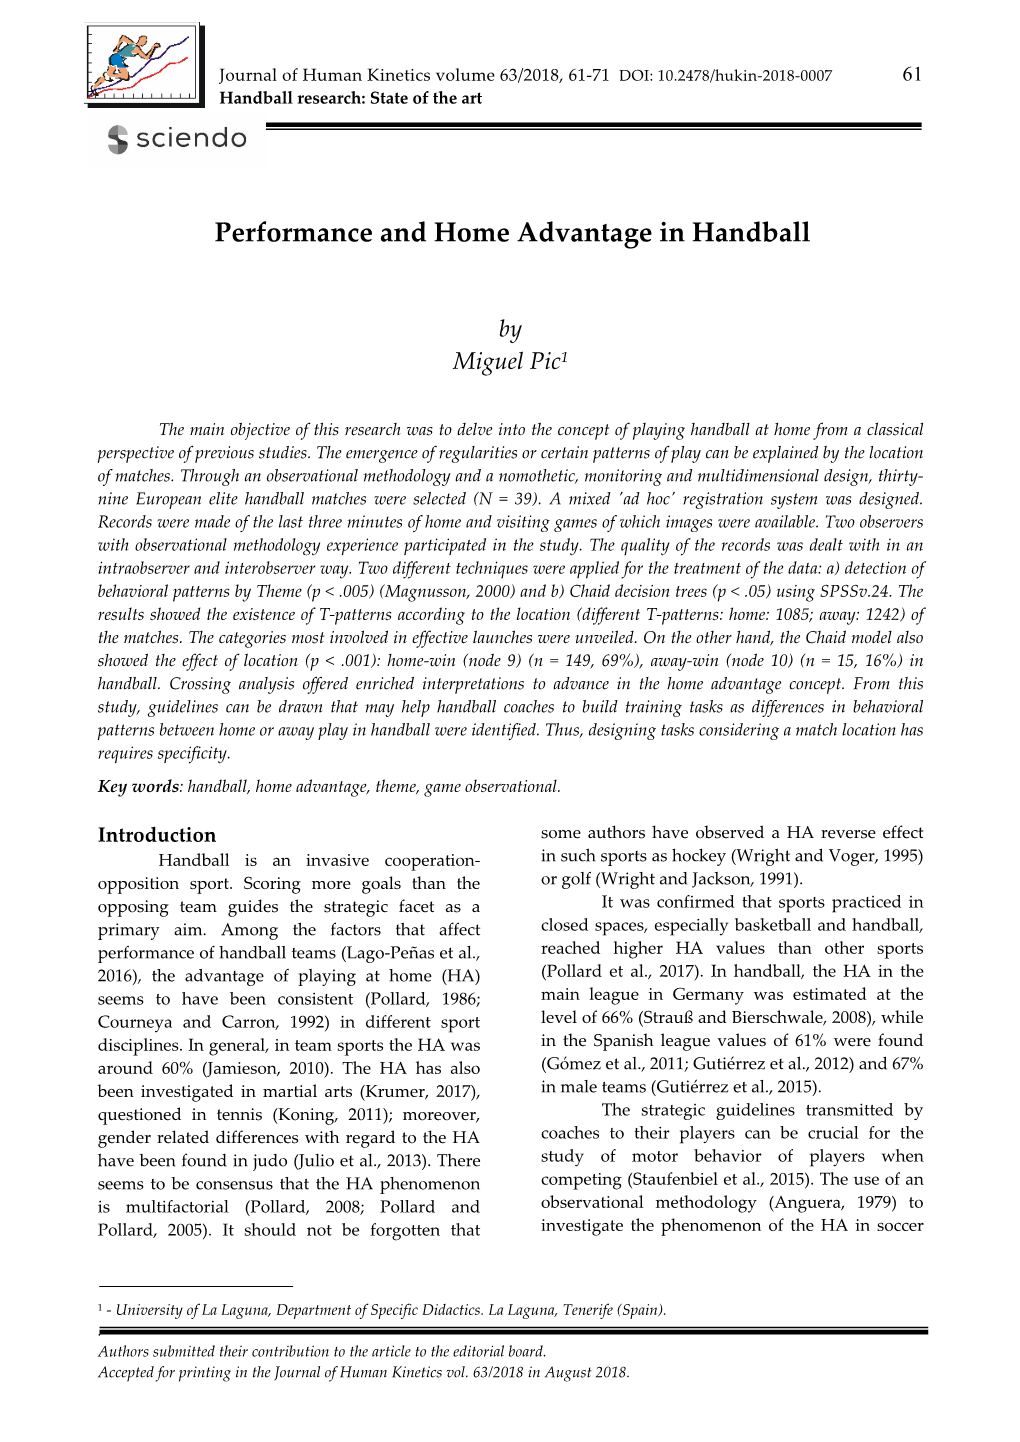 Performance and Home Advantage in Handball